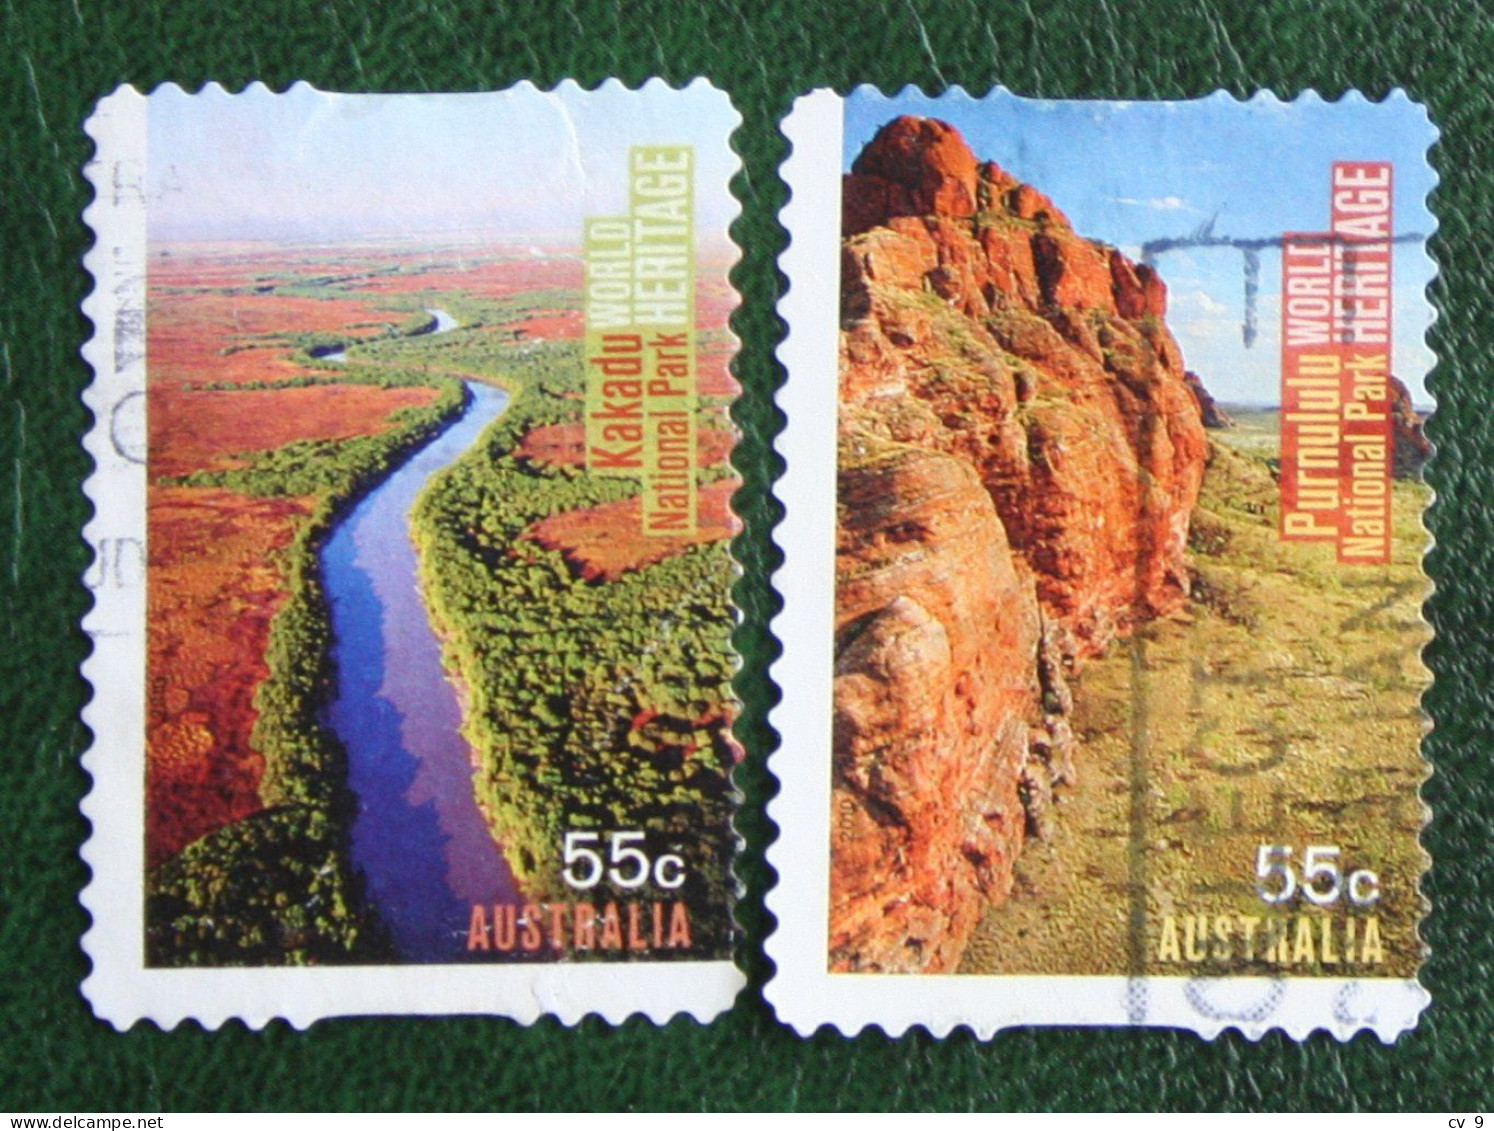 UNESCO World Heritage Self Adhesive 2010 Mi 3390-3391 Y&T - Used Gebruikt Oblitere Australia Australien Australie - Used Stamps